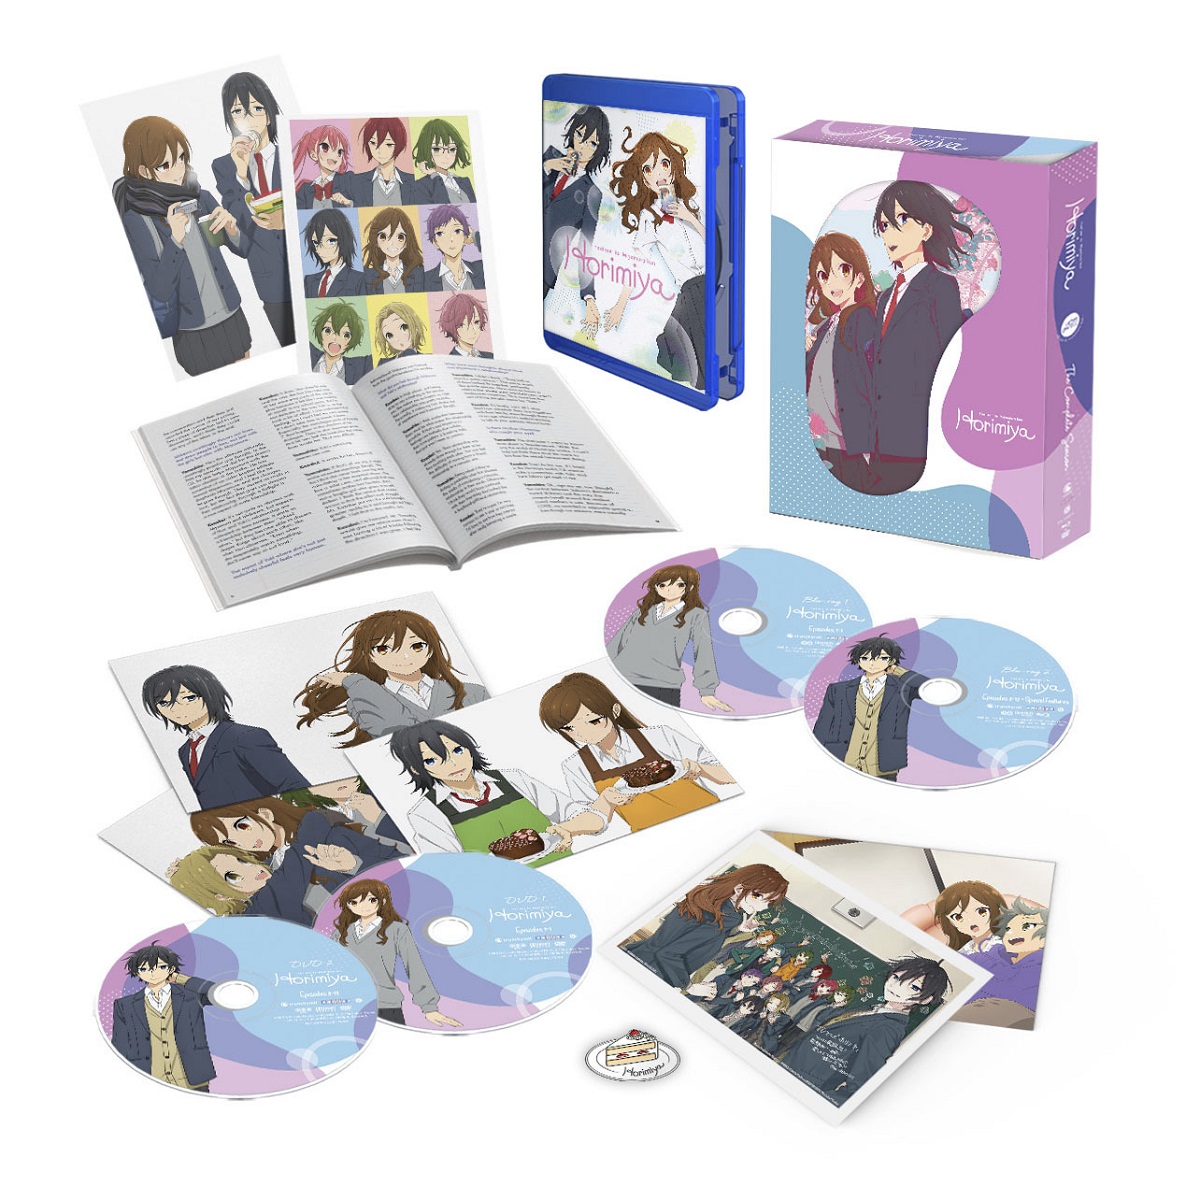 Horimiya Limited Edition Blu-ray/DVD image count 0